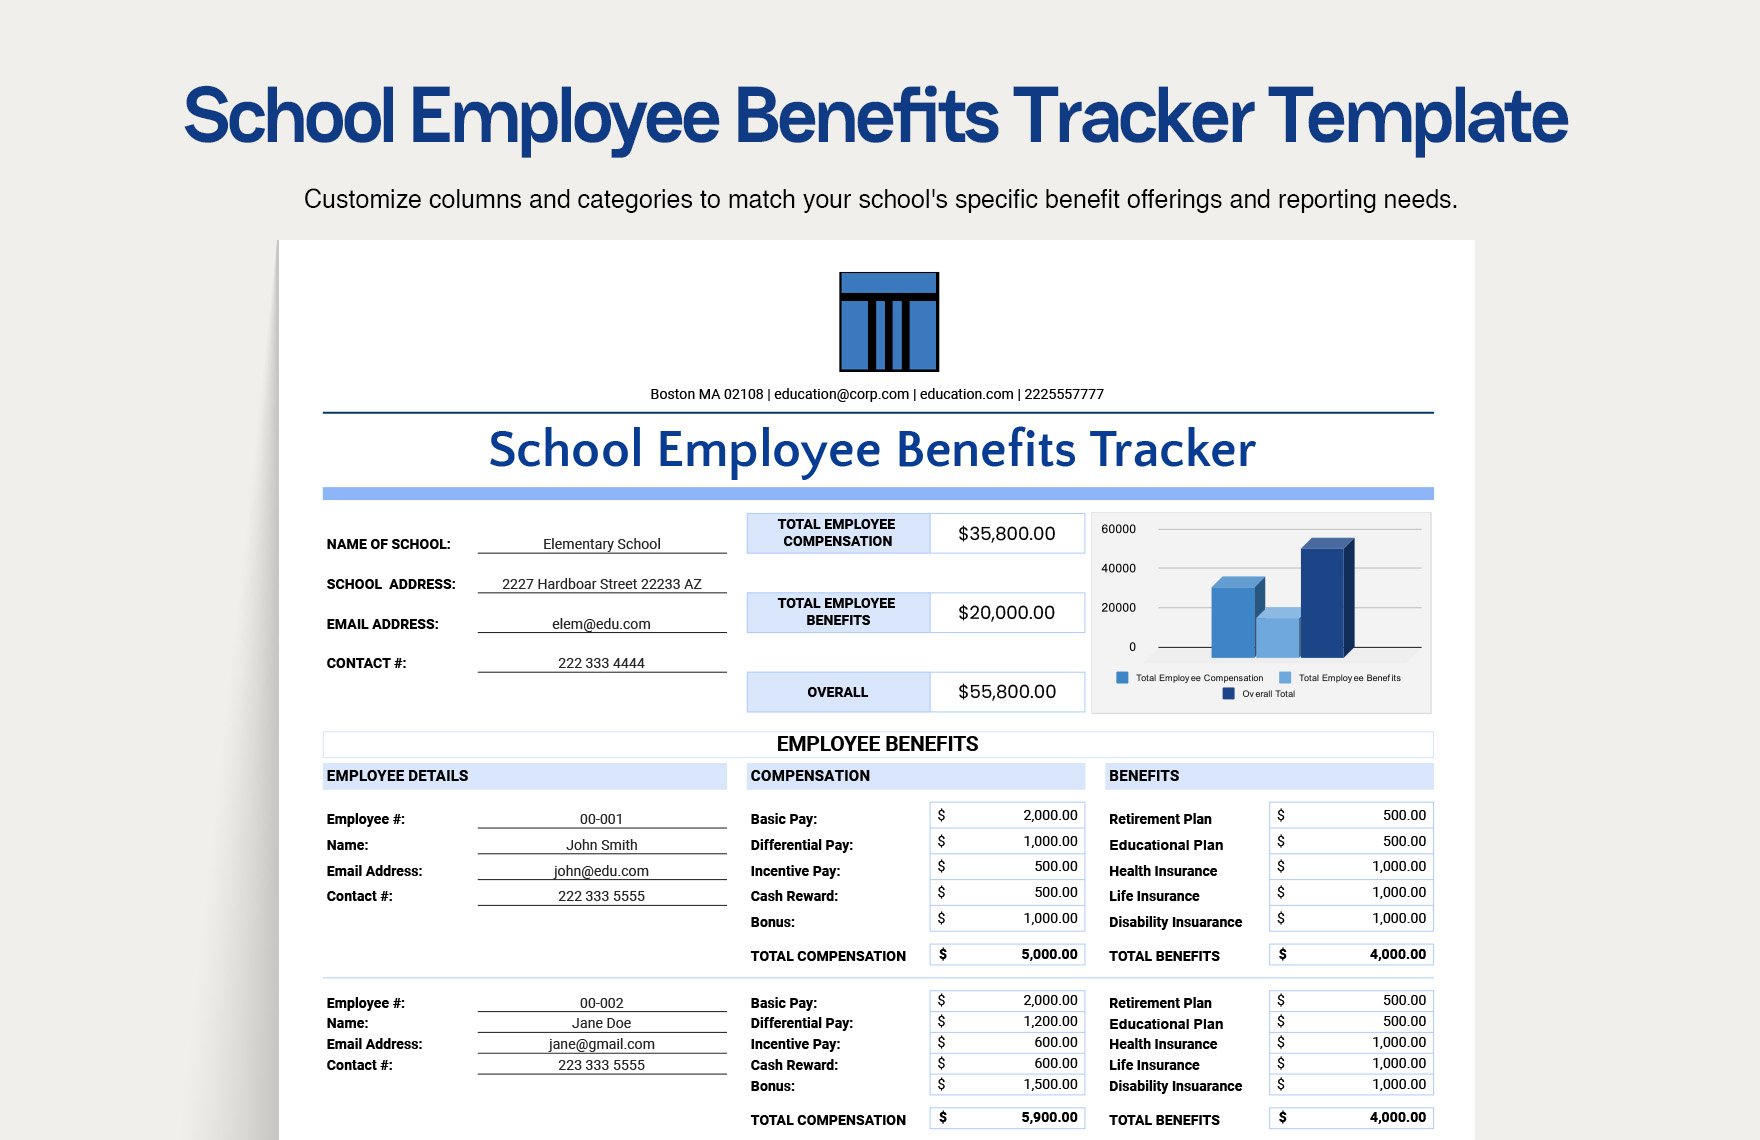 School Employee Benefits Tracker Template